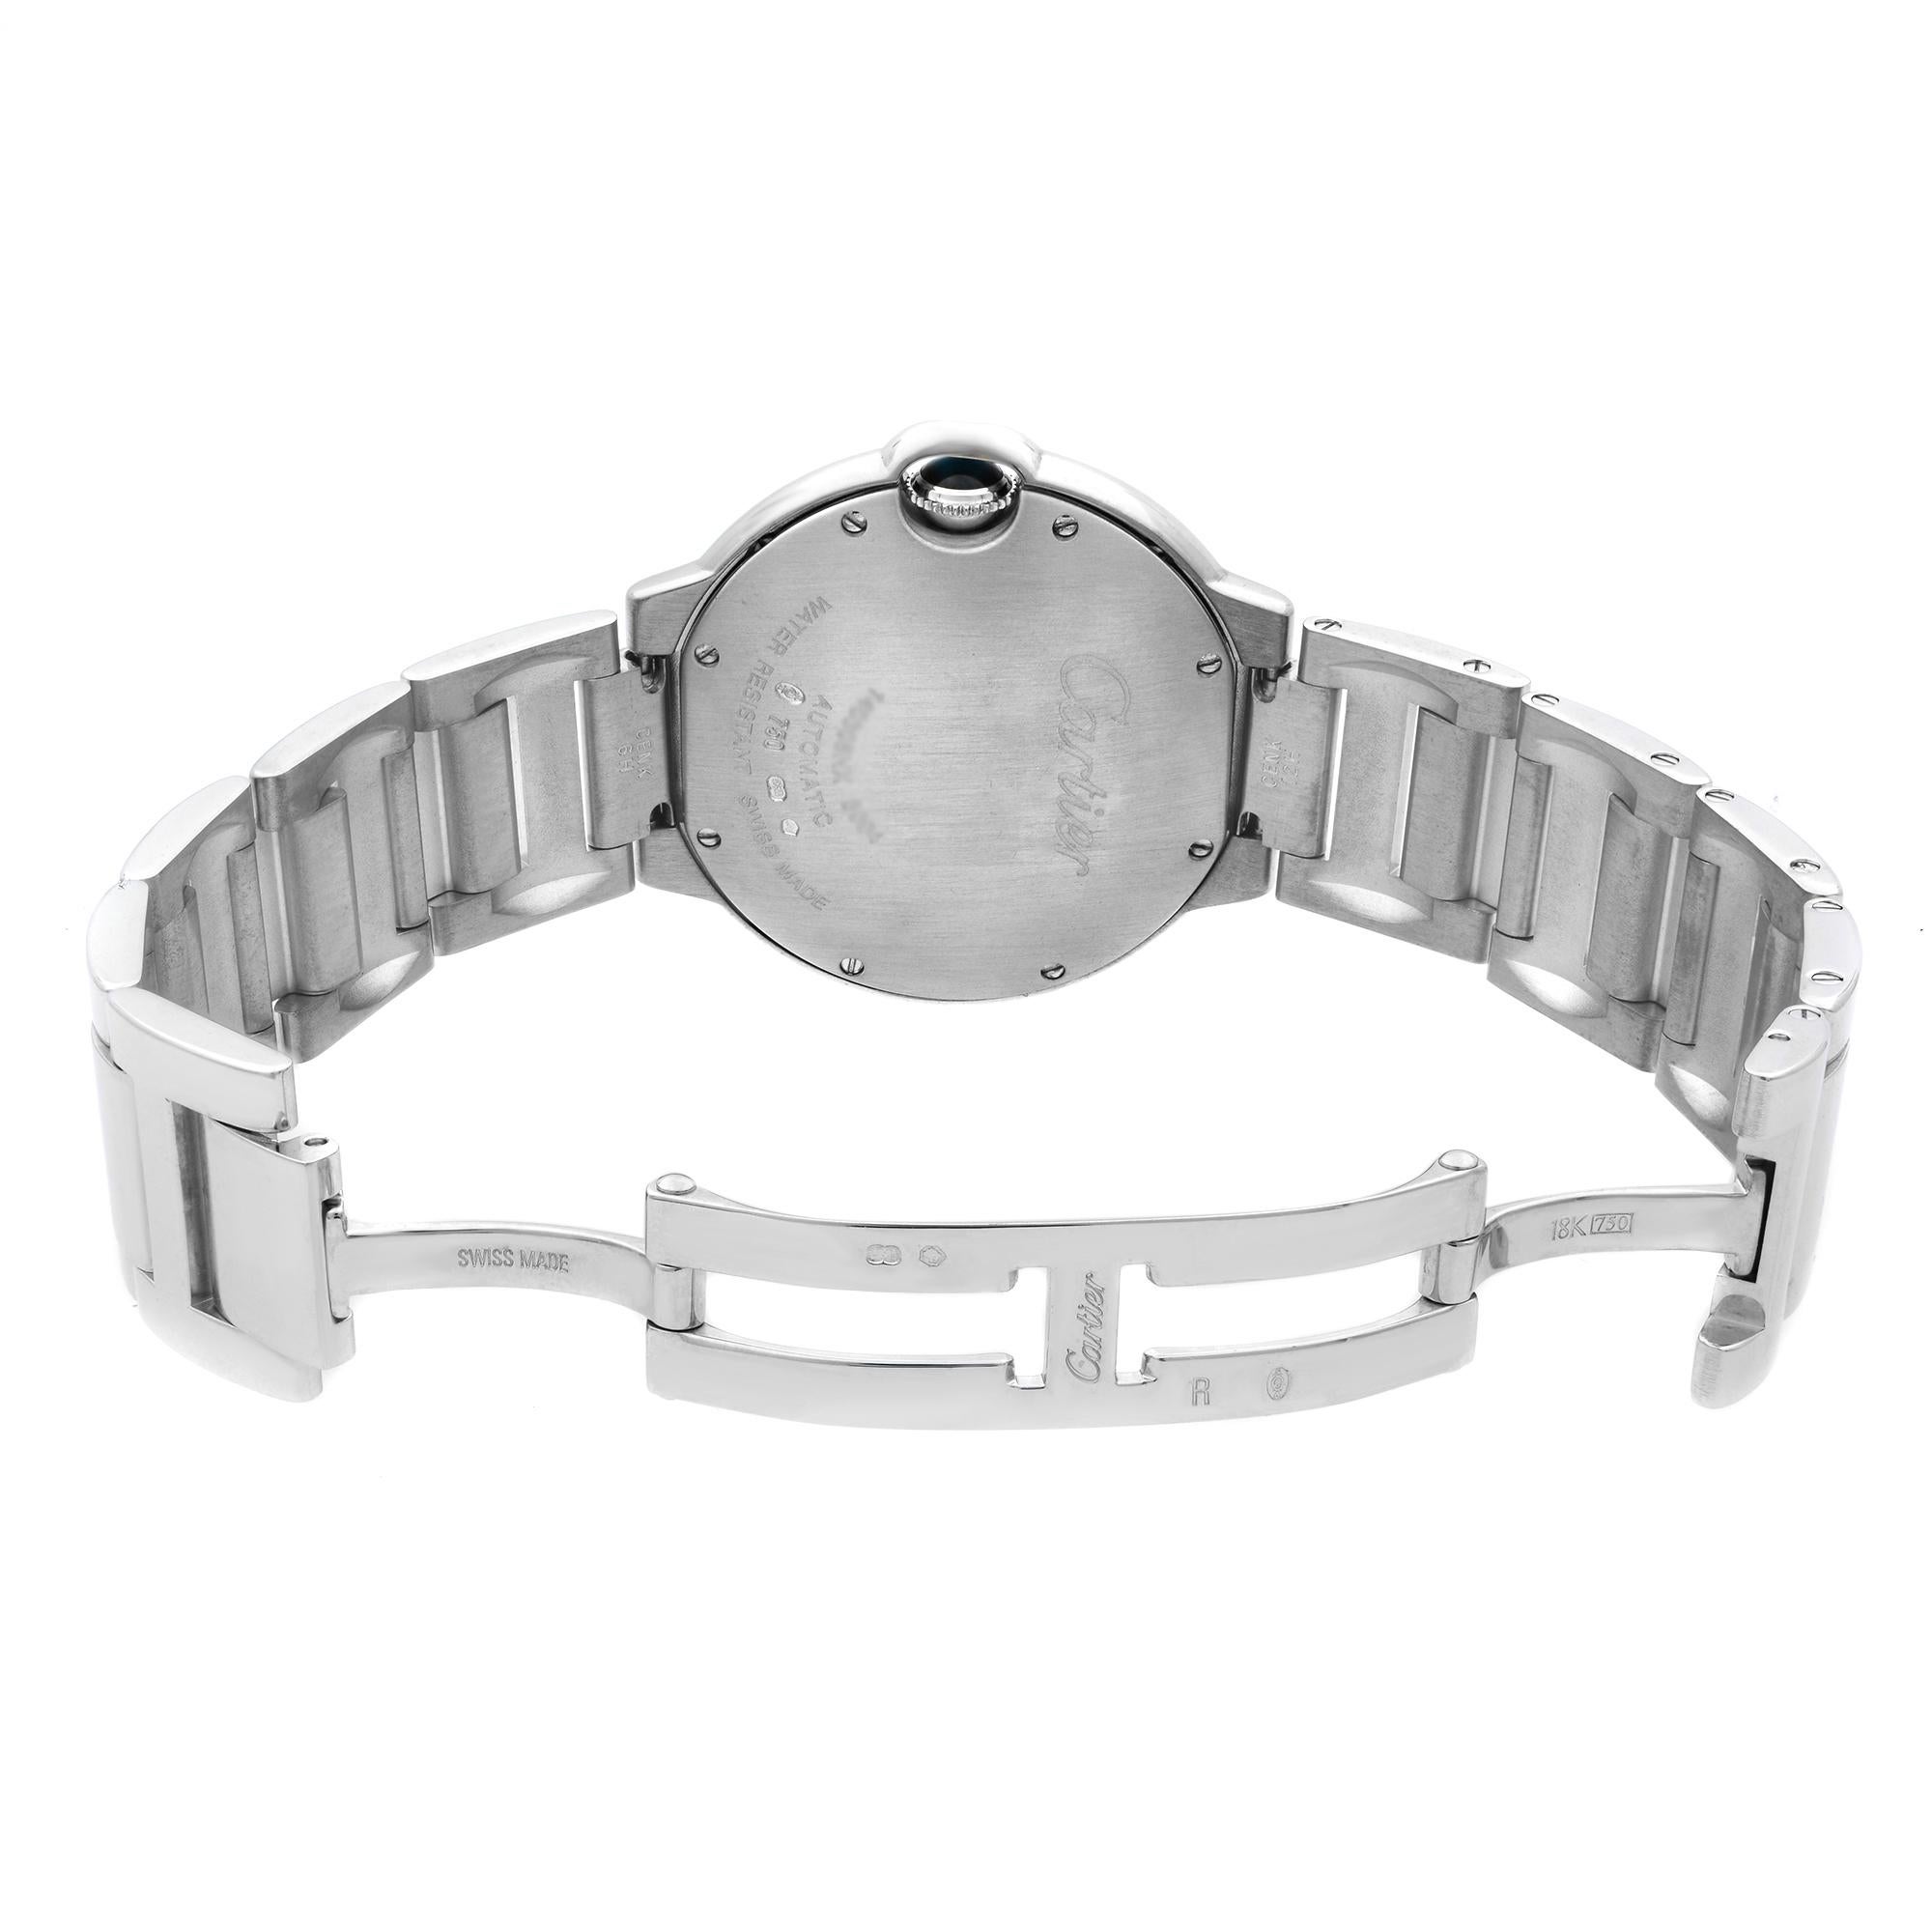 Cartier Ballon Bleu White Gold Diamond Bezel Silver Dial Watch WE9006Z3 2